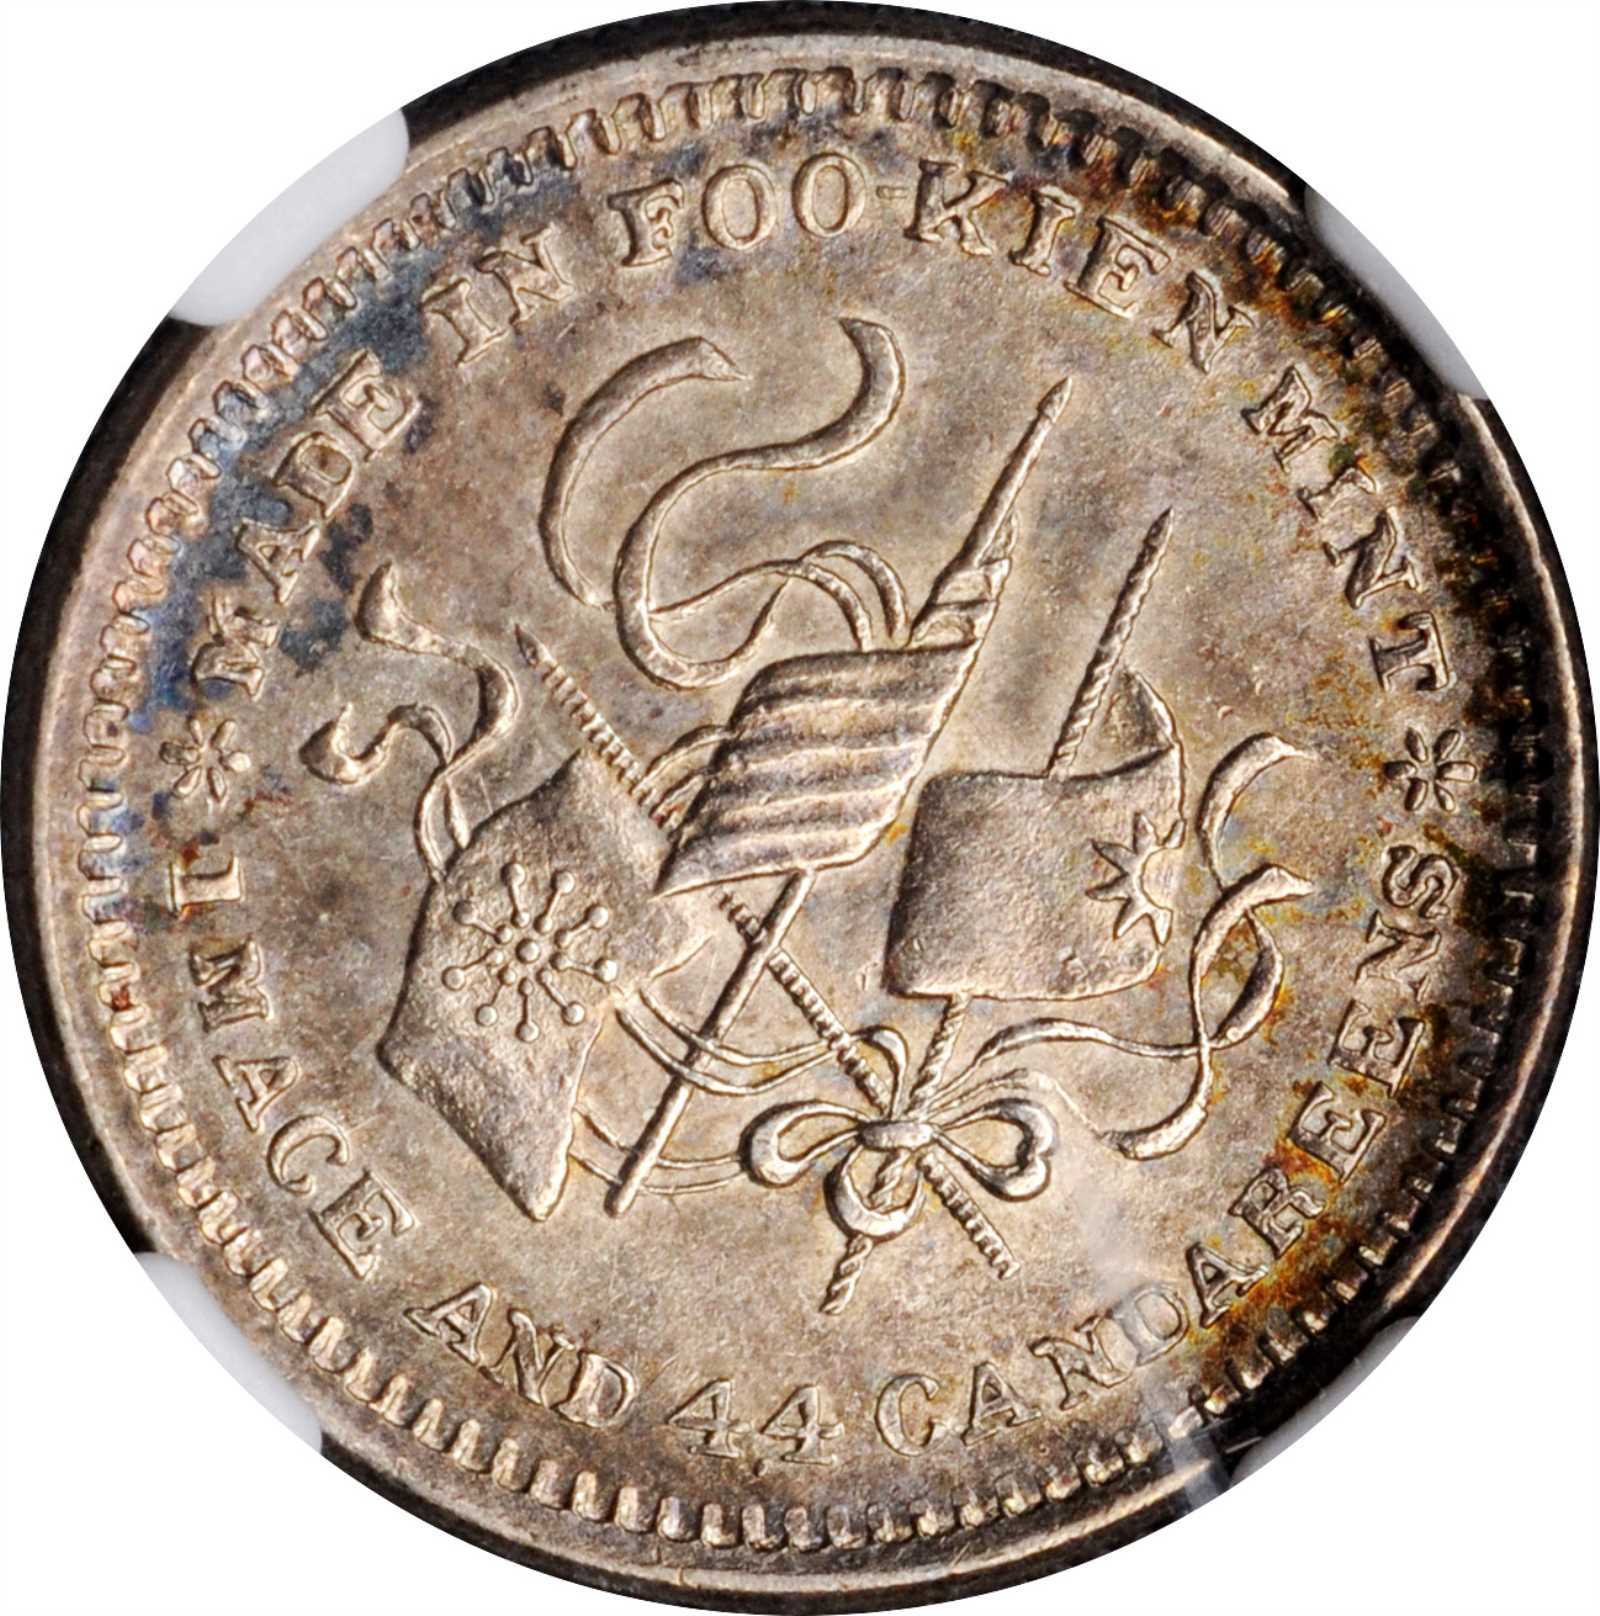 t) CHINA. Fukien. 1 Mace 4.4 Candareens (20 Cents), ND (1912). NGC 